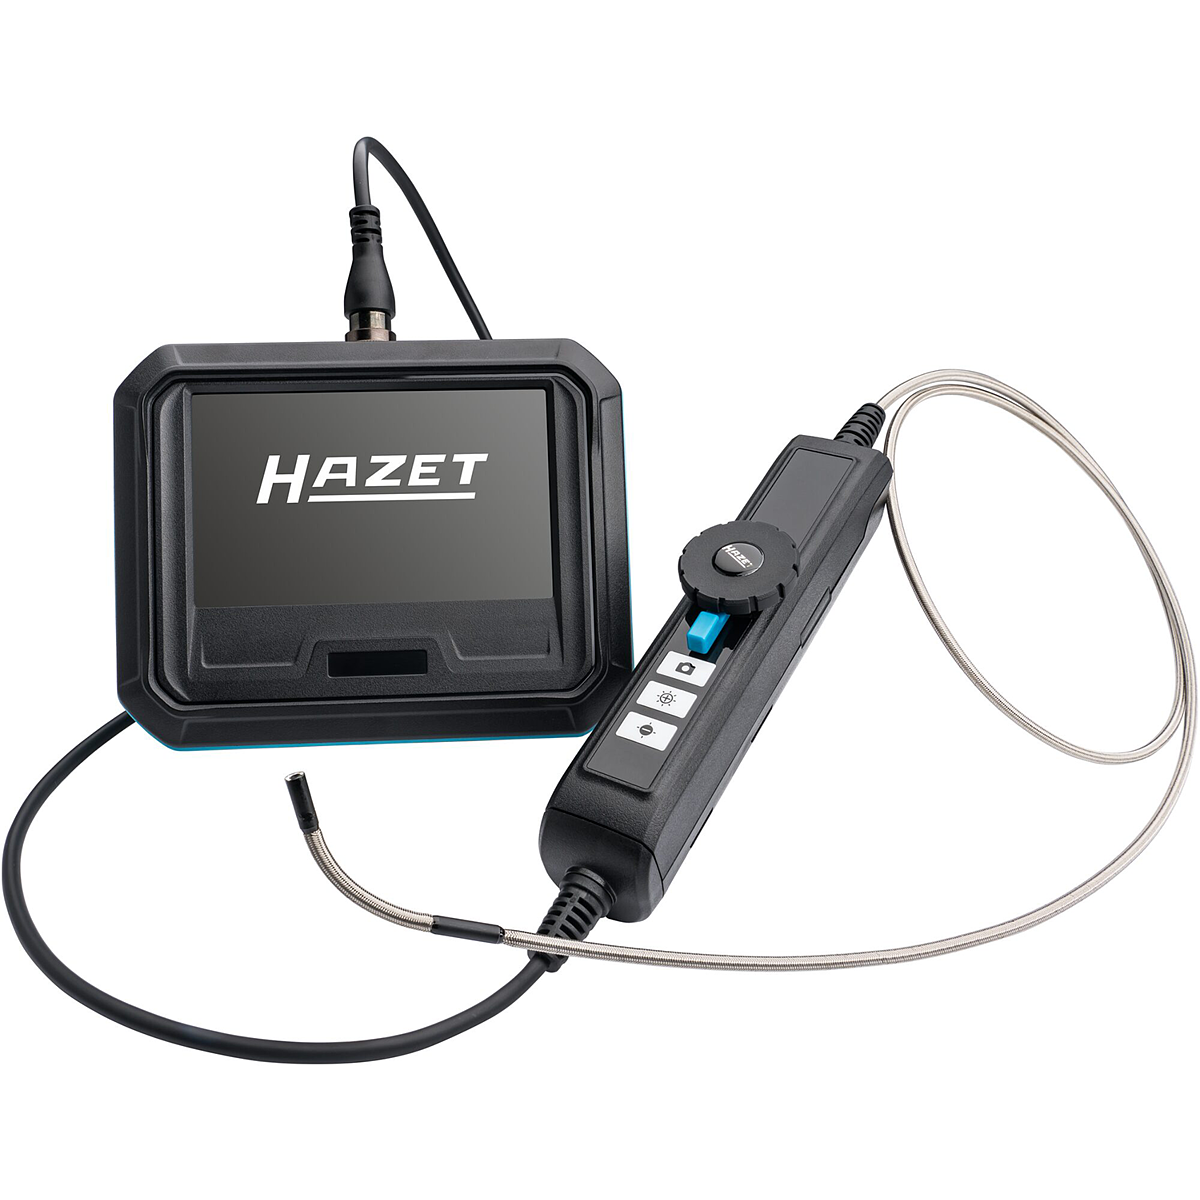 HZ 4812-23 - 5AF: Digital Endoskop, schwenkbarer Kamerakopf, 180°, 3,9 mm  bei reichelt elektronik